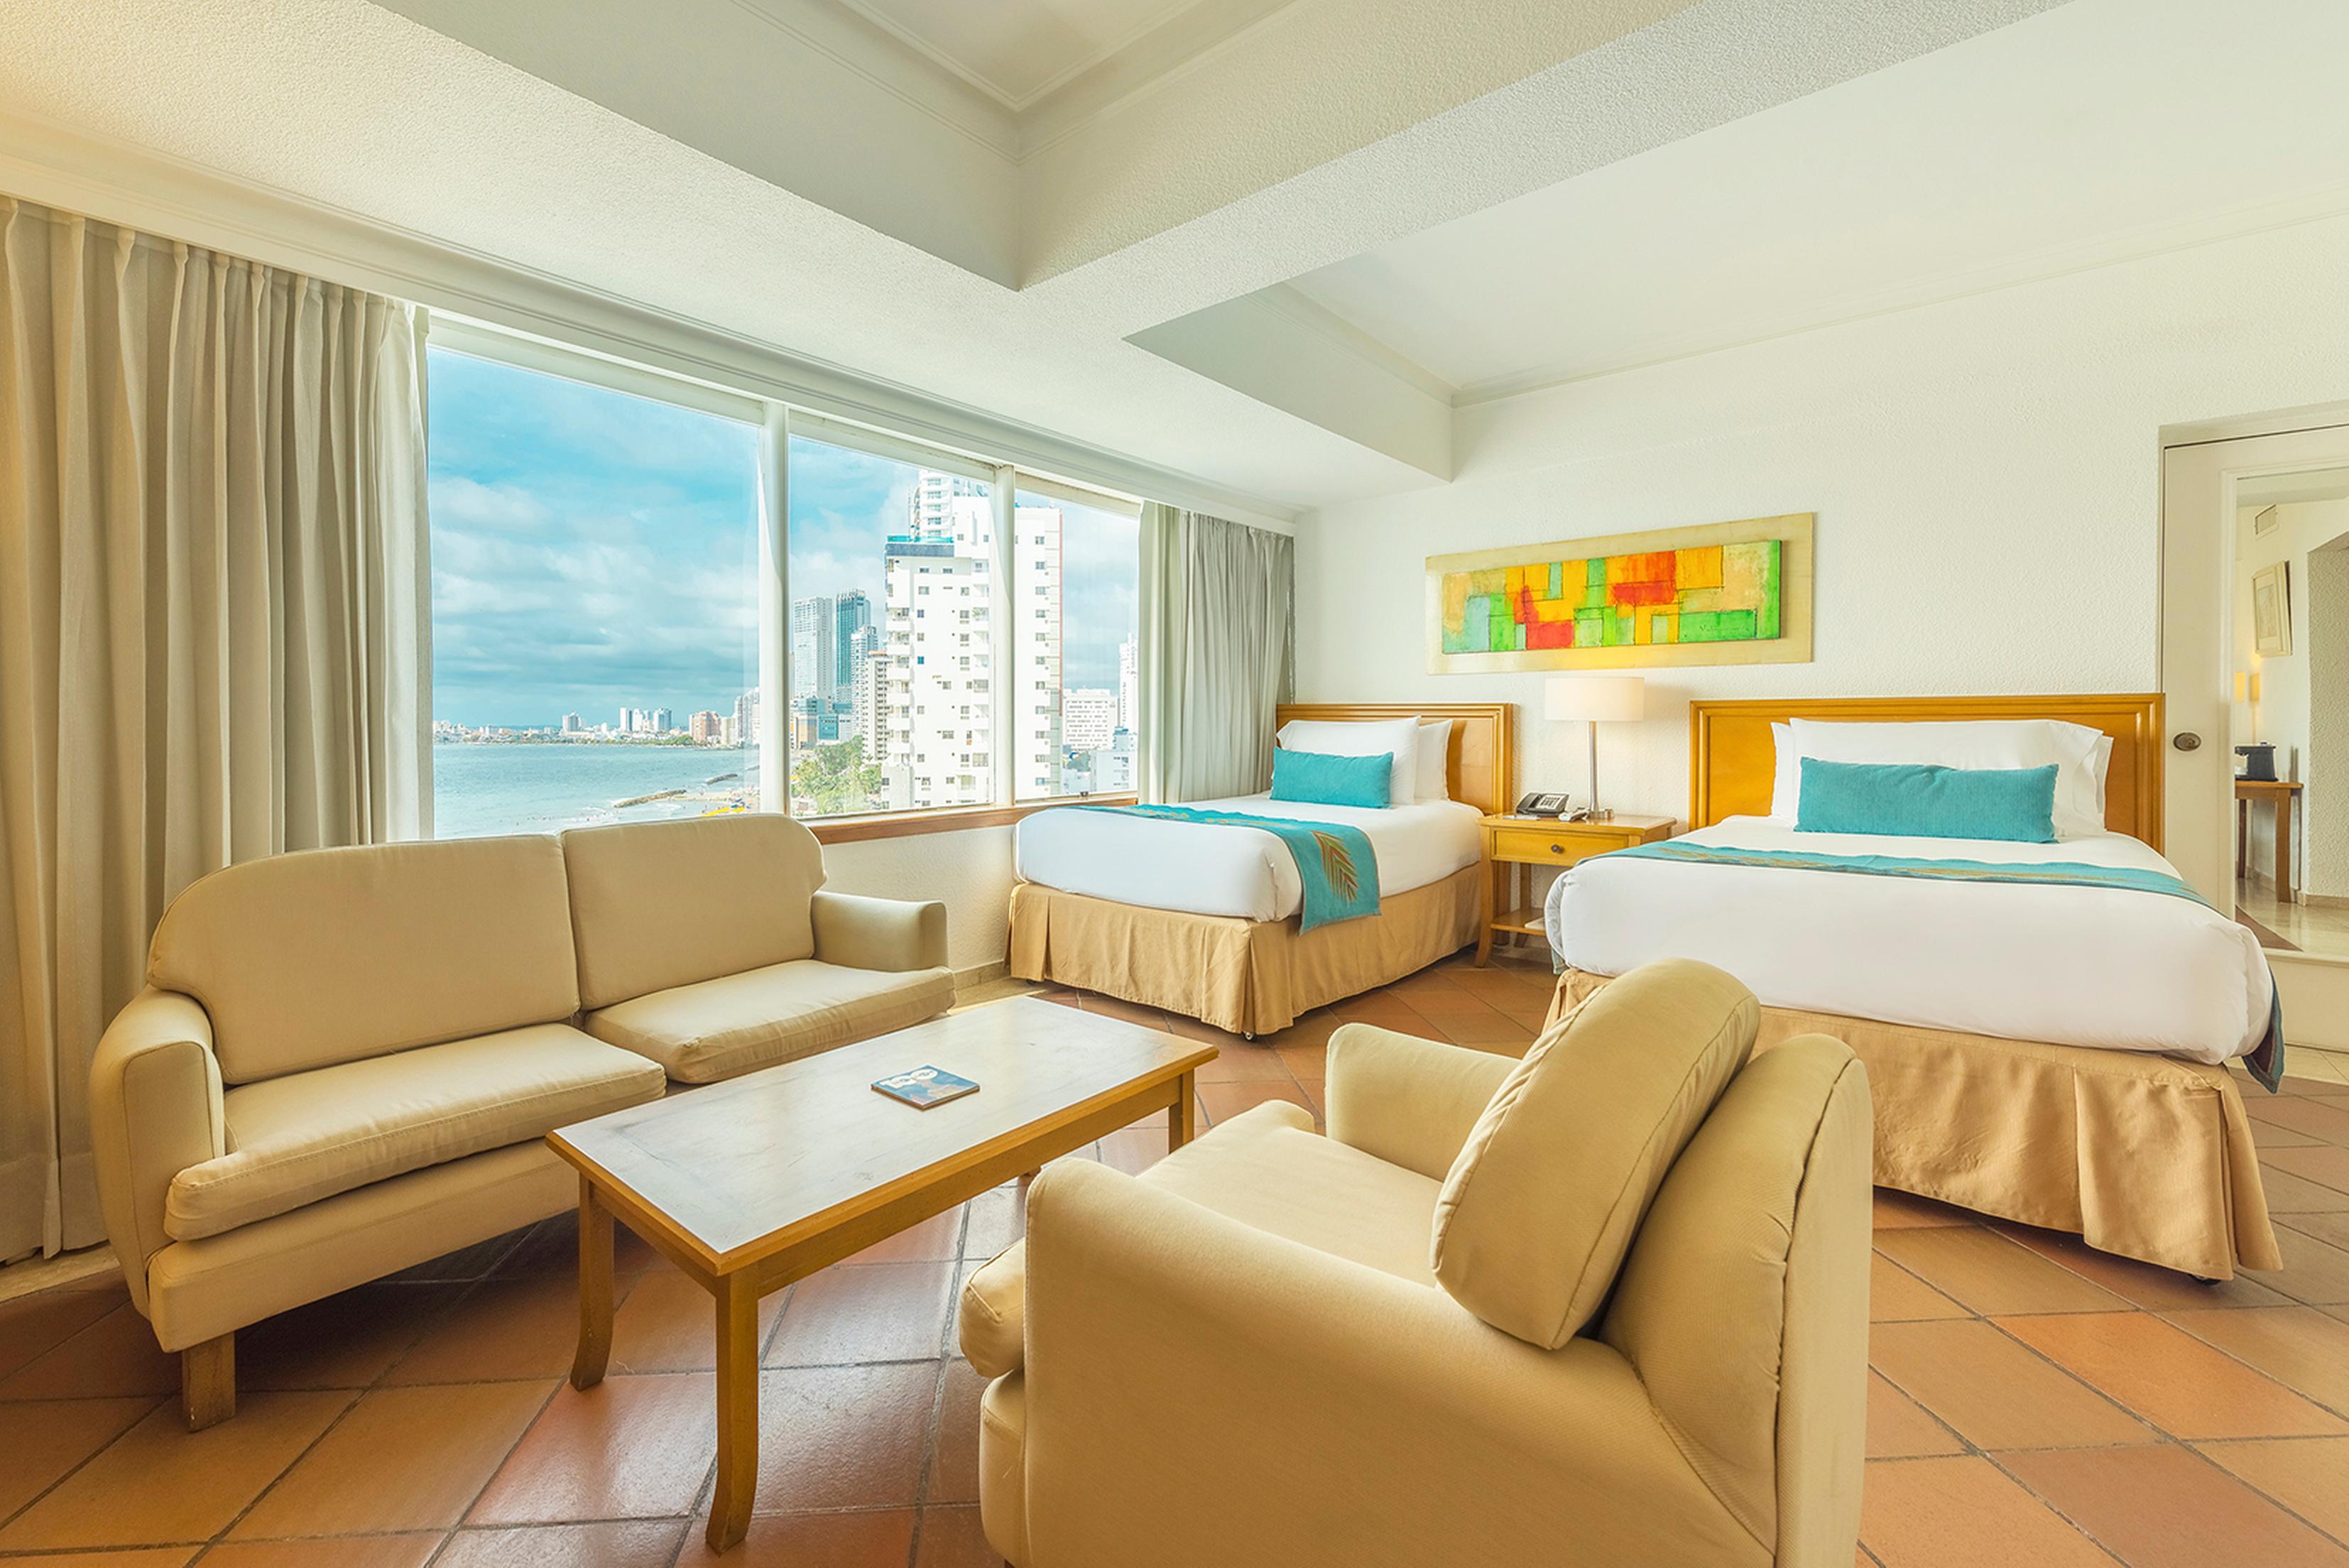 Hotel Almirante Cartagena Colombia מראה חיצוני תמונה